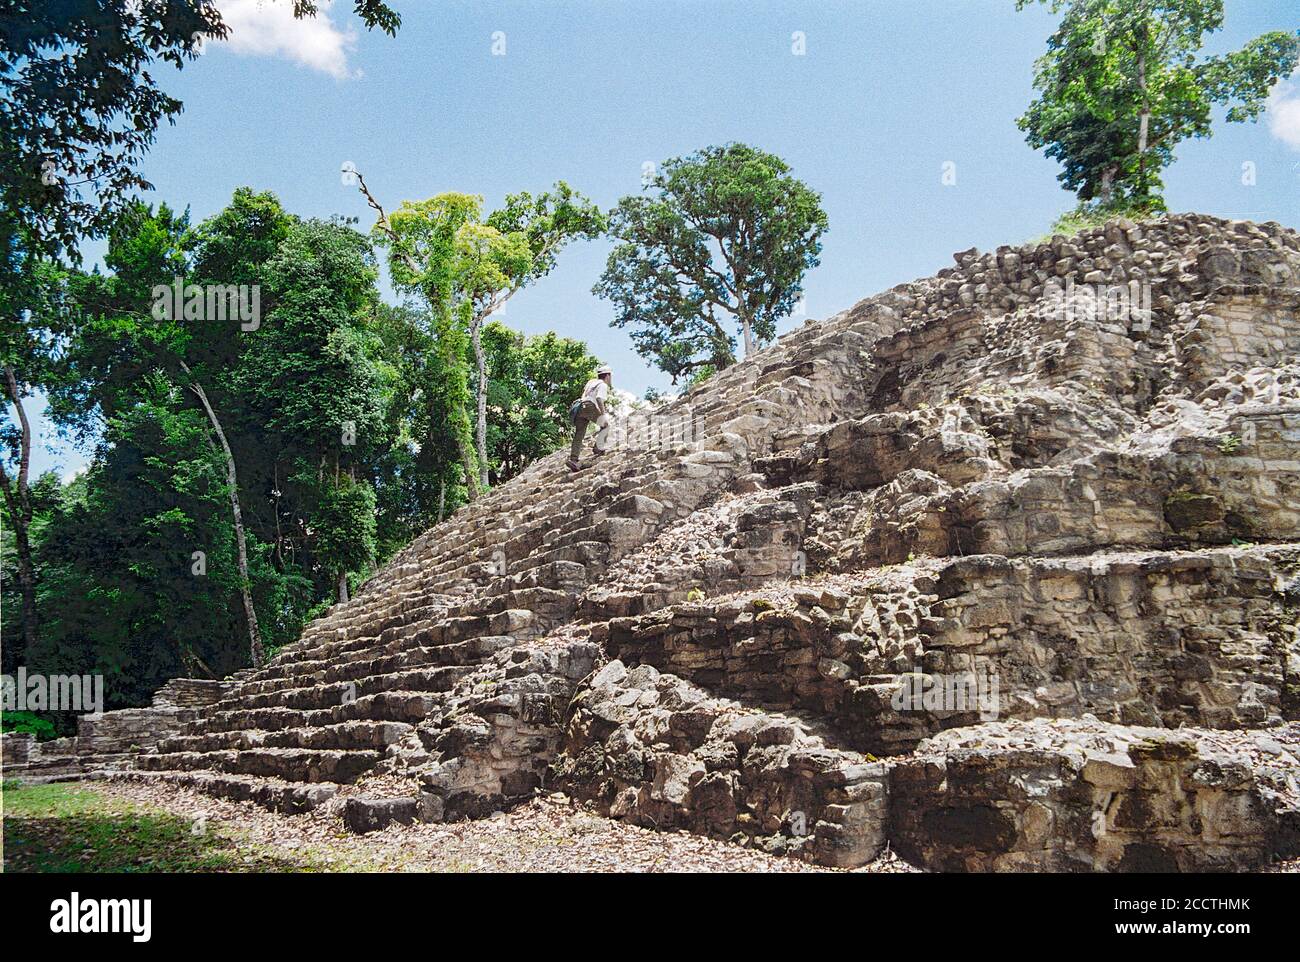 Eine Person klettert Stufen - West Akropolis. Yaxchilan Maya Ruinen; Chiapas, Mexiko. Vintage Film Bild - ca. 1990. Stockfoto